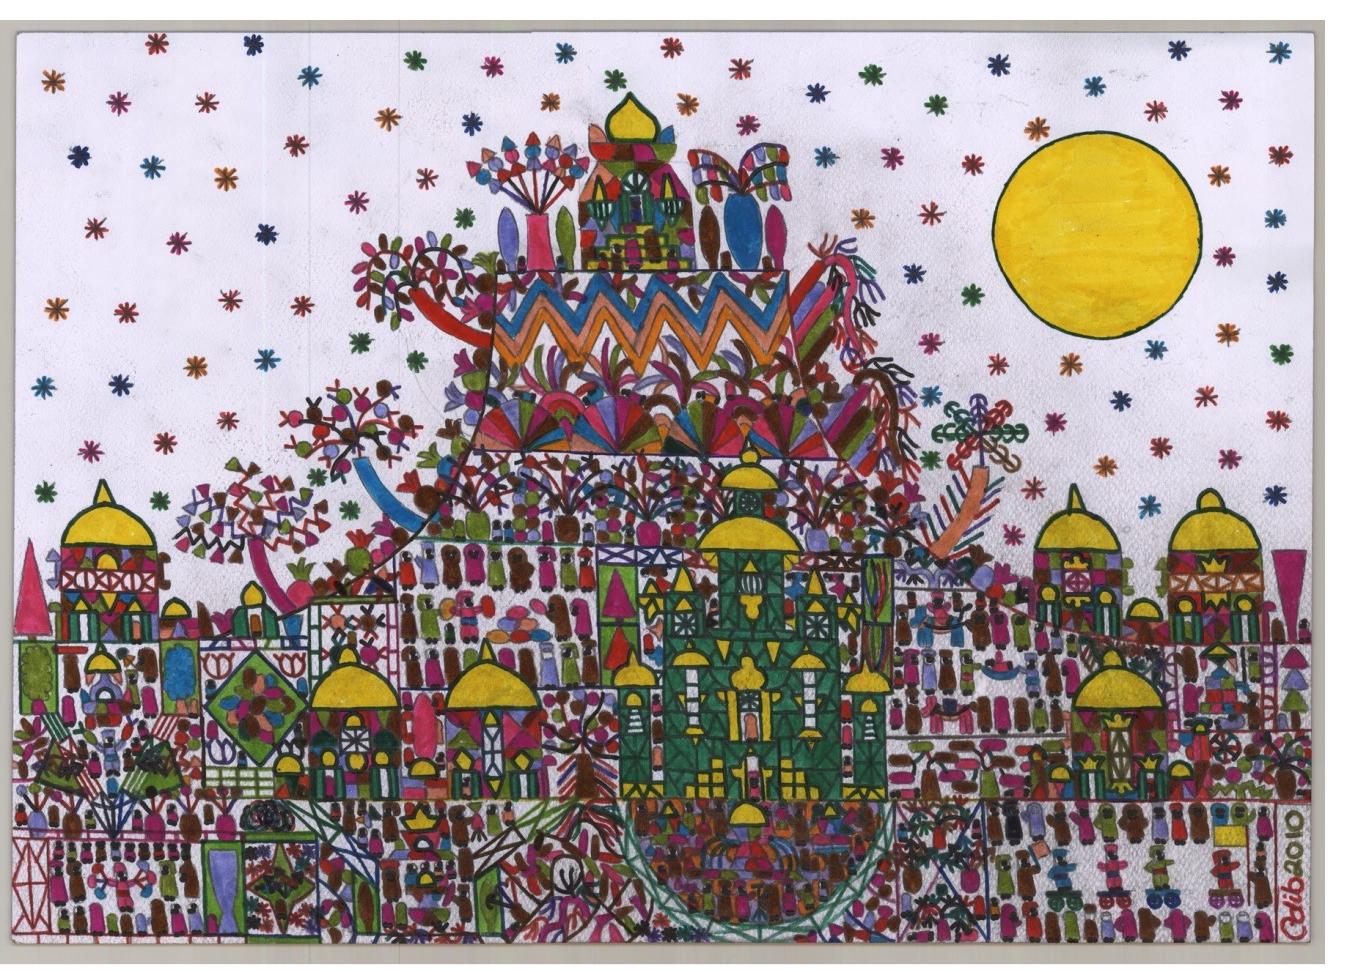 Adib Fattal - 624 "A Village Next to a Volcano" - 30cm x 50 cm - ink on paper - 2010